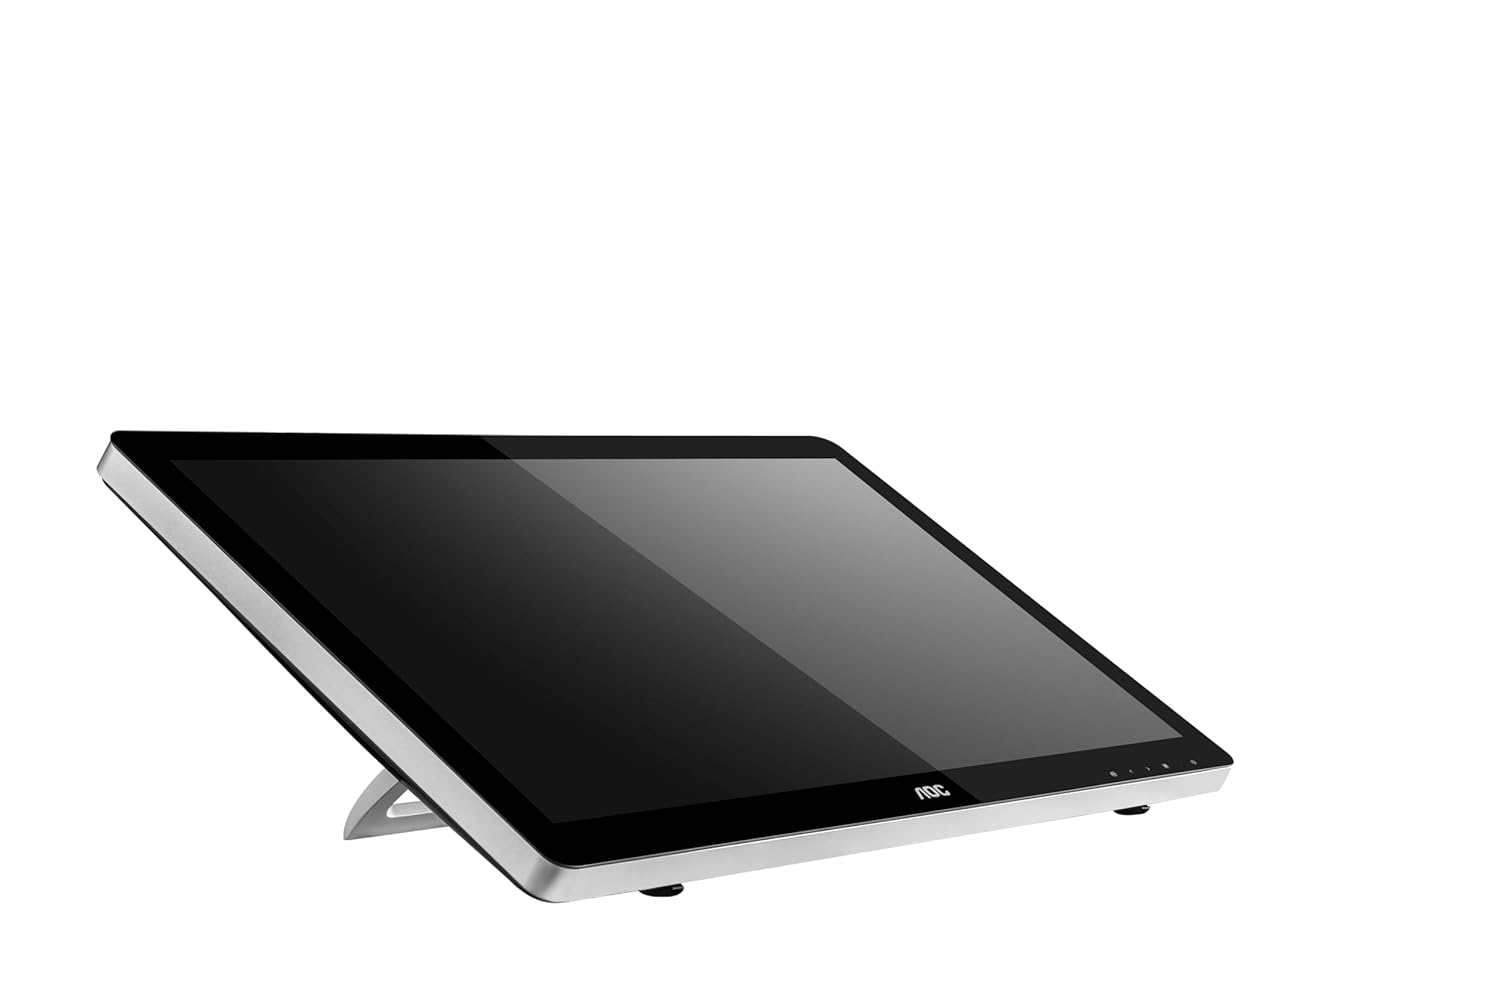 AOC E2272PWUT 21.5" (53.3cm) LED Touch Monitor with VGA Port, HDMI*2 Ports, USB 2.0, Black